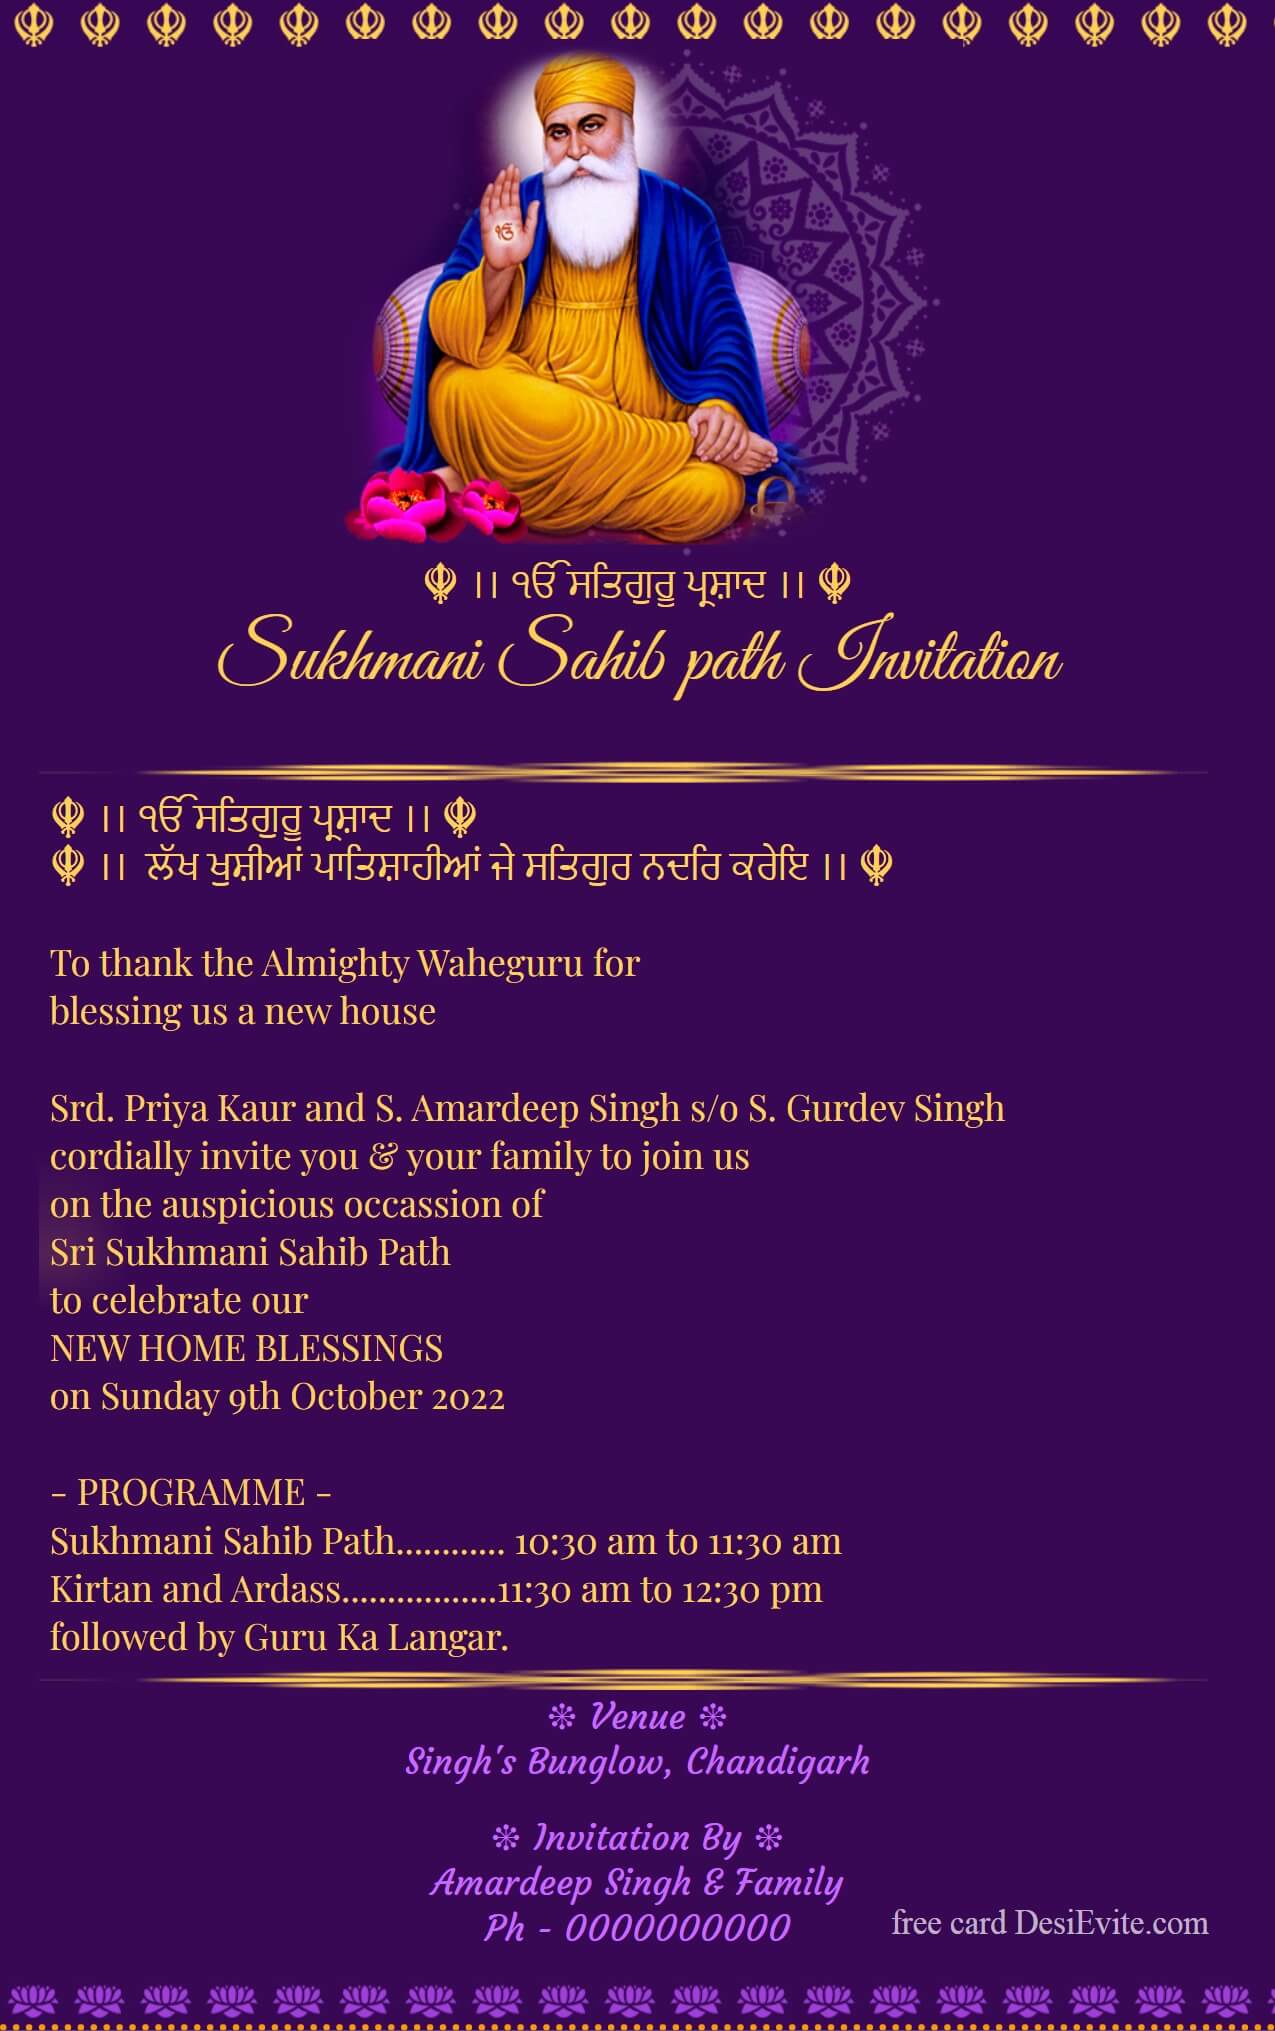 Sukhmani Sahib path Invitation card 52 